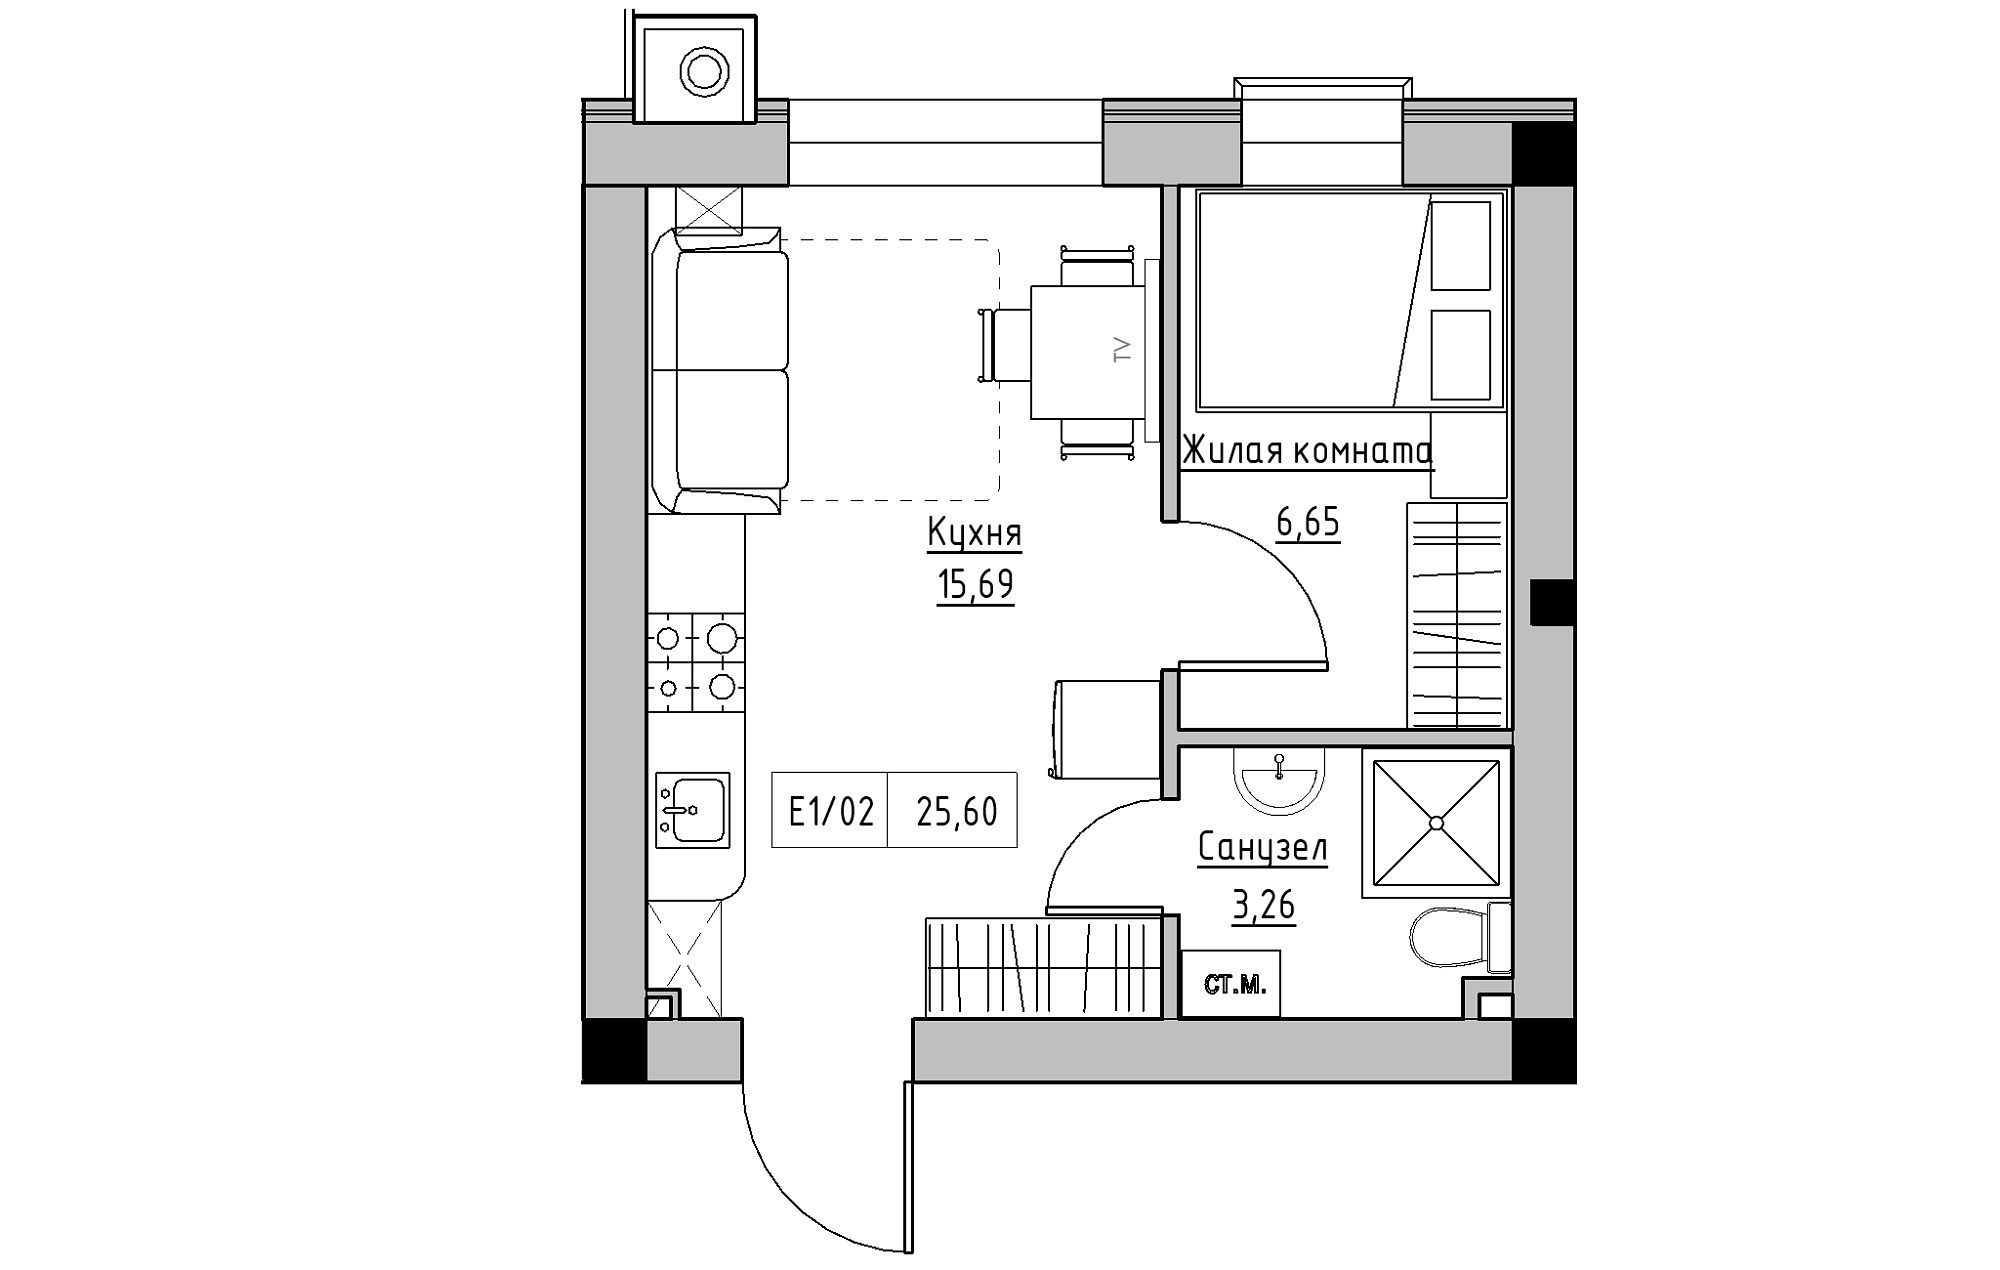 Planning 1-rm flats area 25.6m2, KS-013-05/0013.